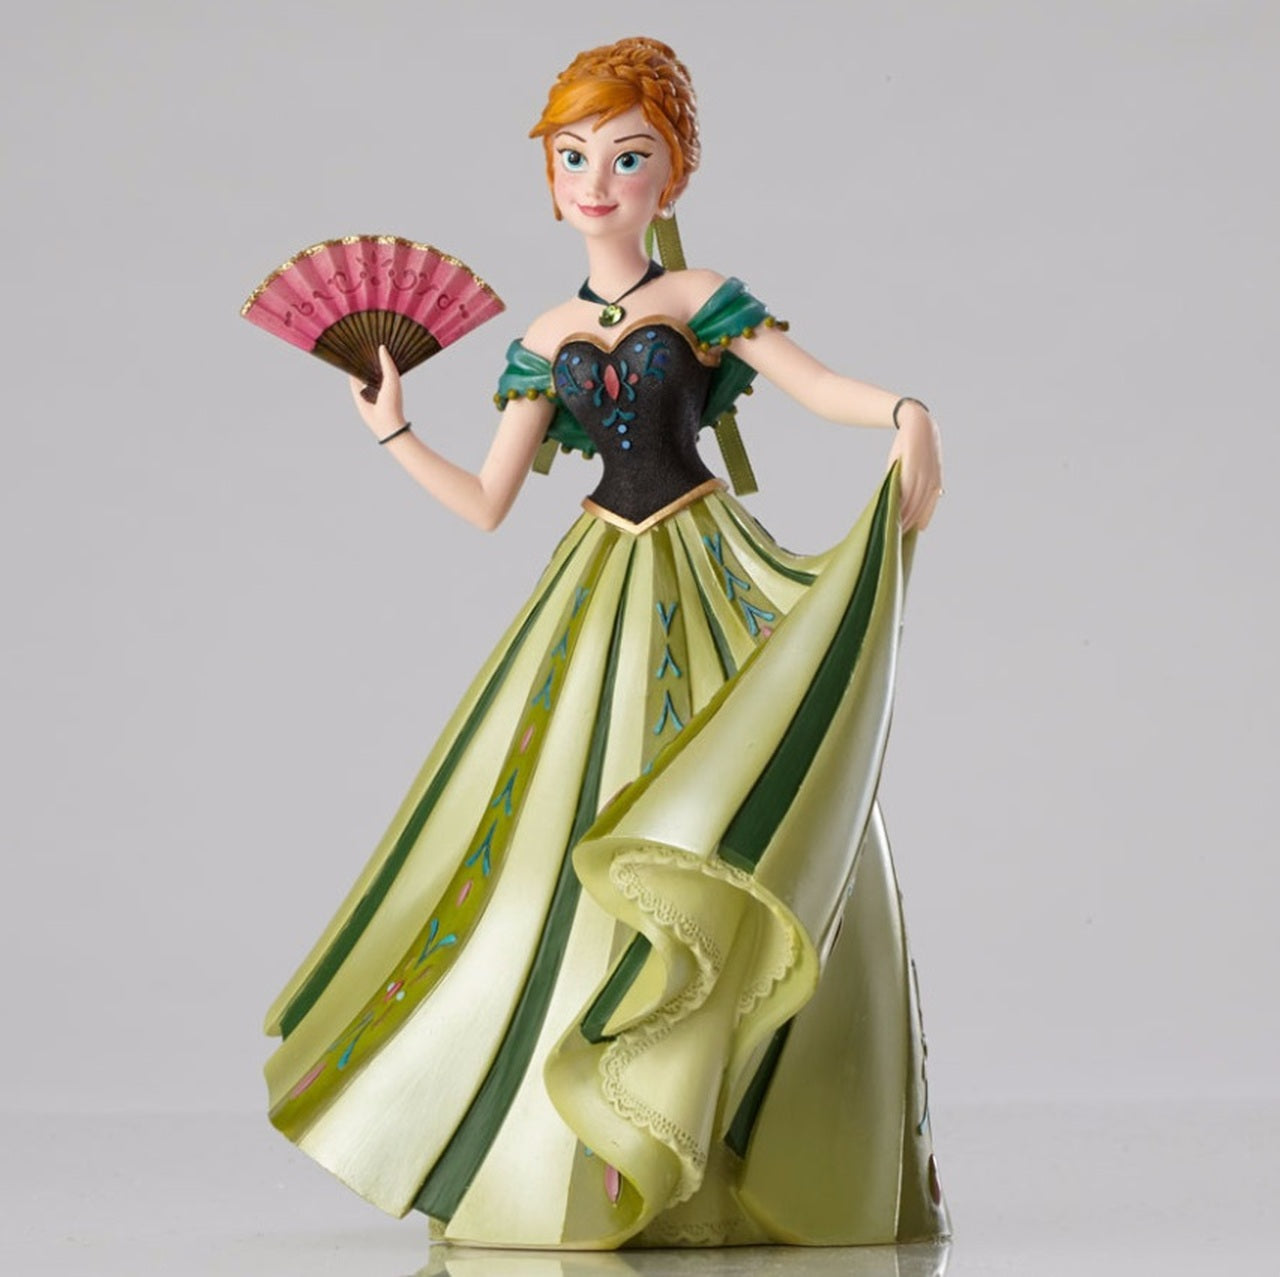 Disney Showcase Couture de Force Frozen Anna Figurine